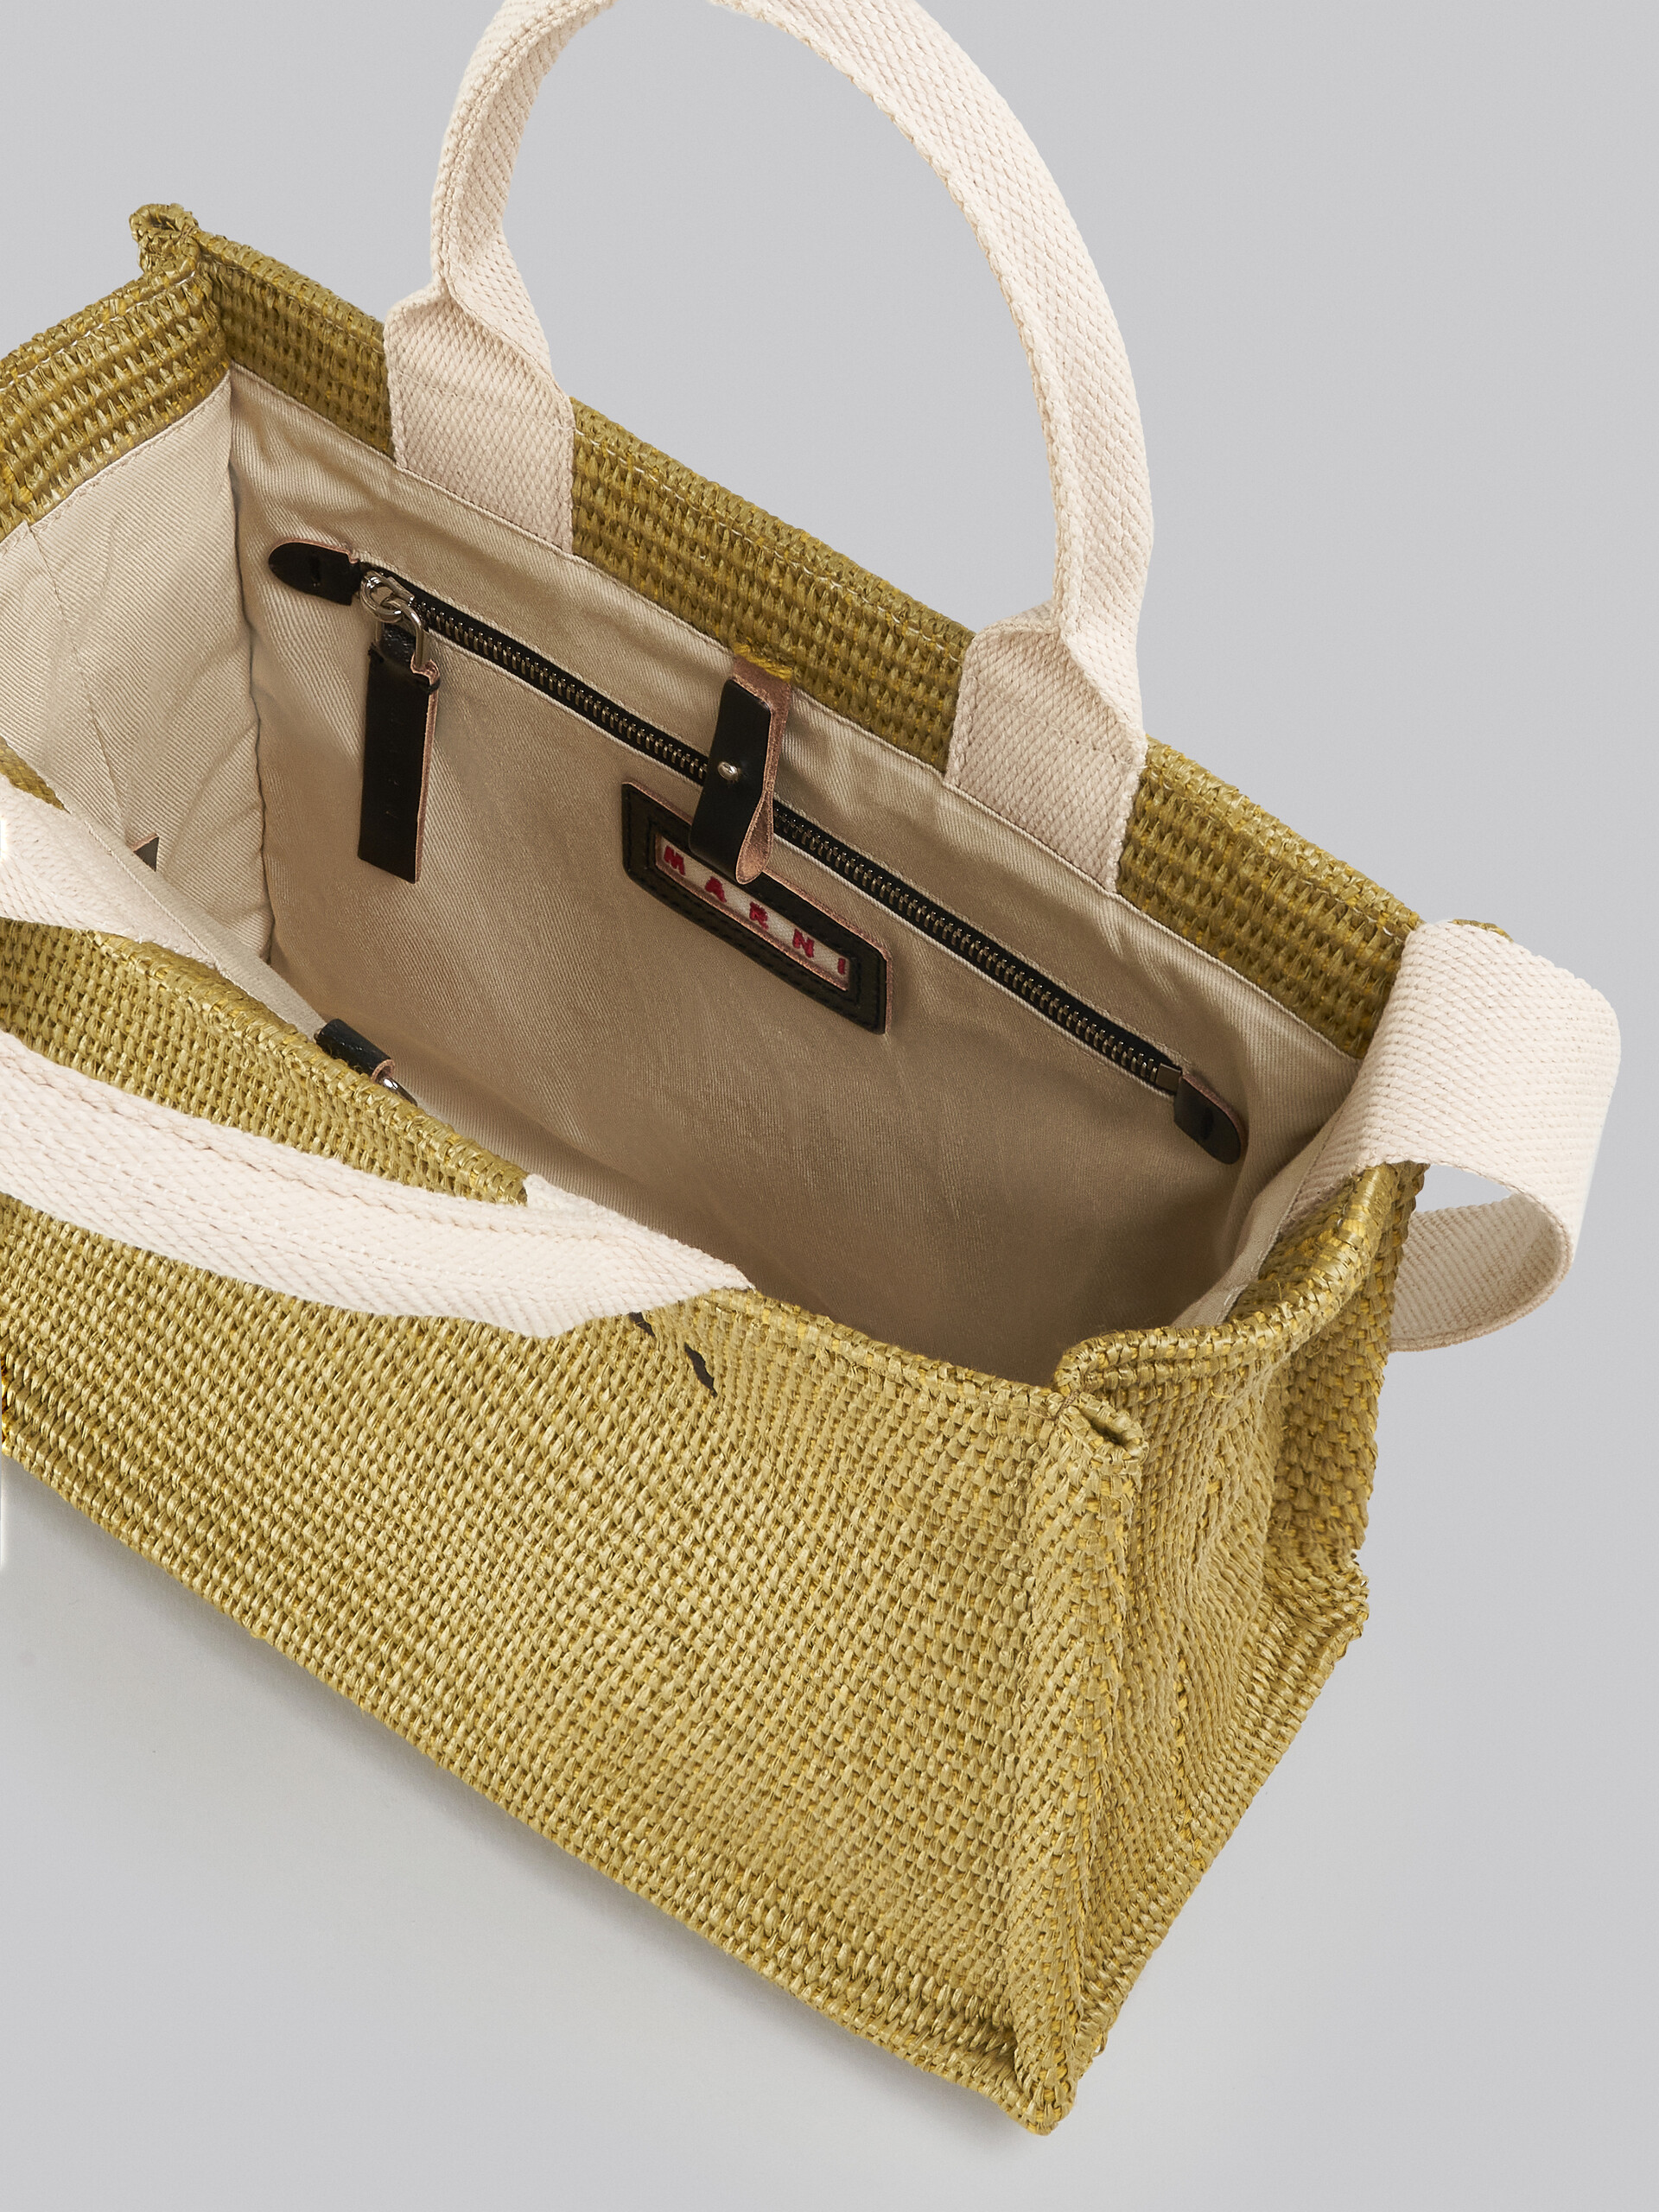 Tote Bag piccola in rafia verde - Borse shopping - Image 4